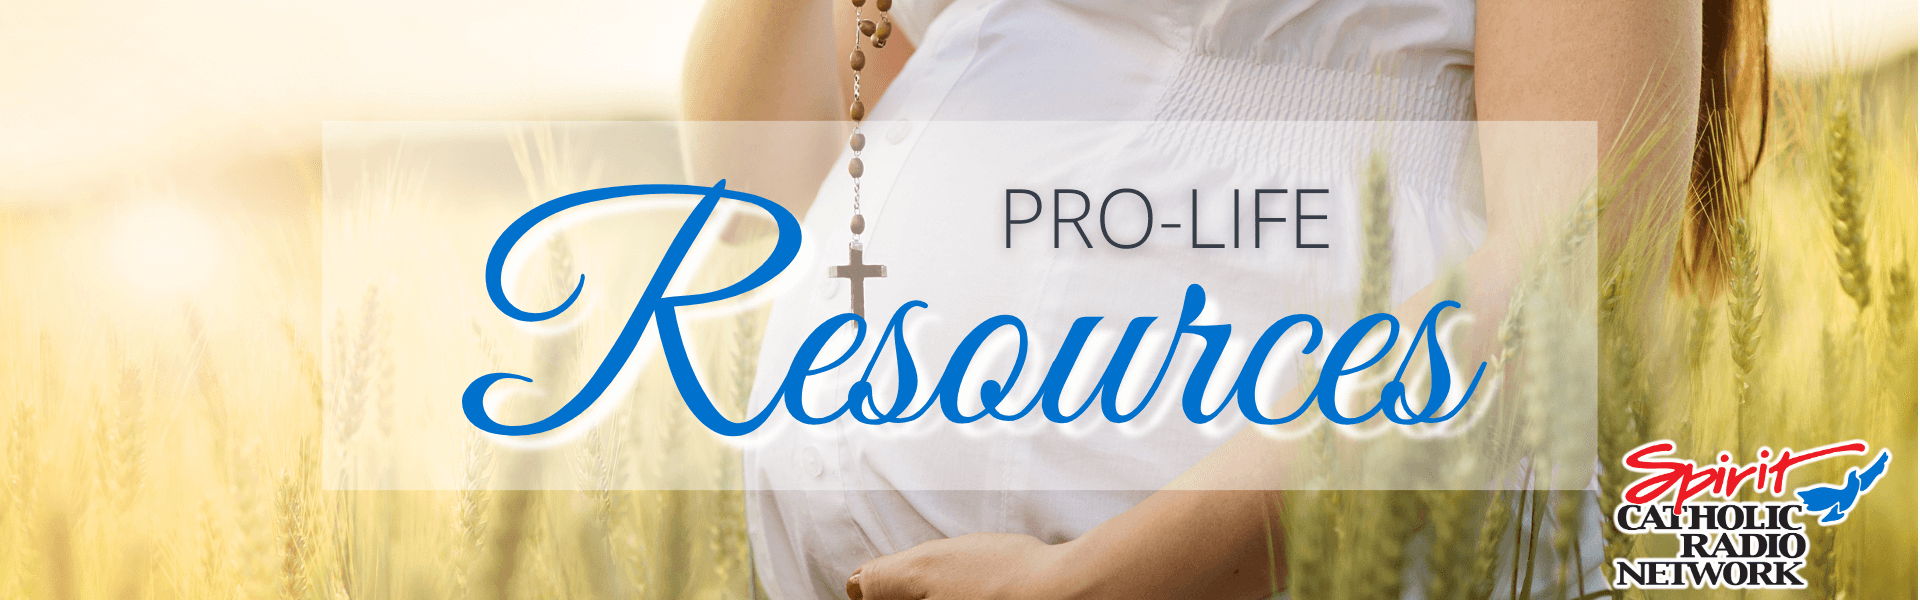 Pro-life Resources